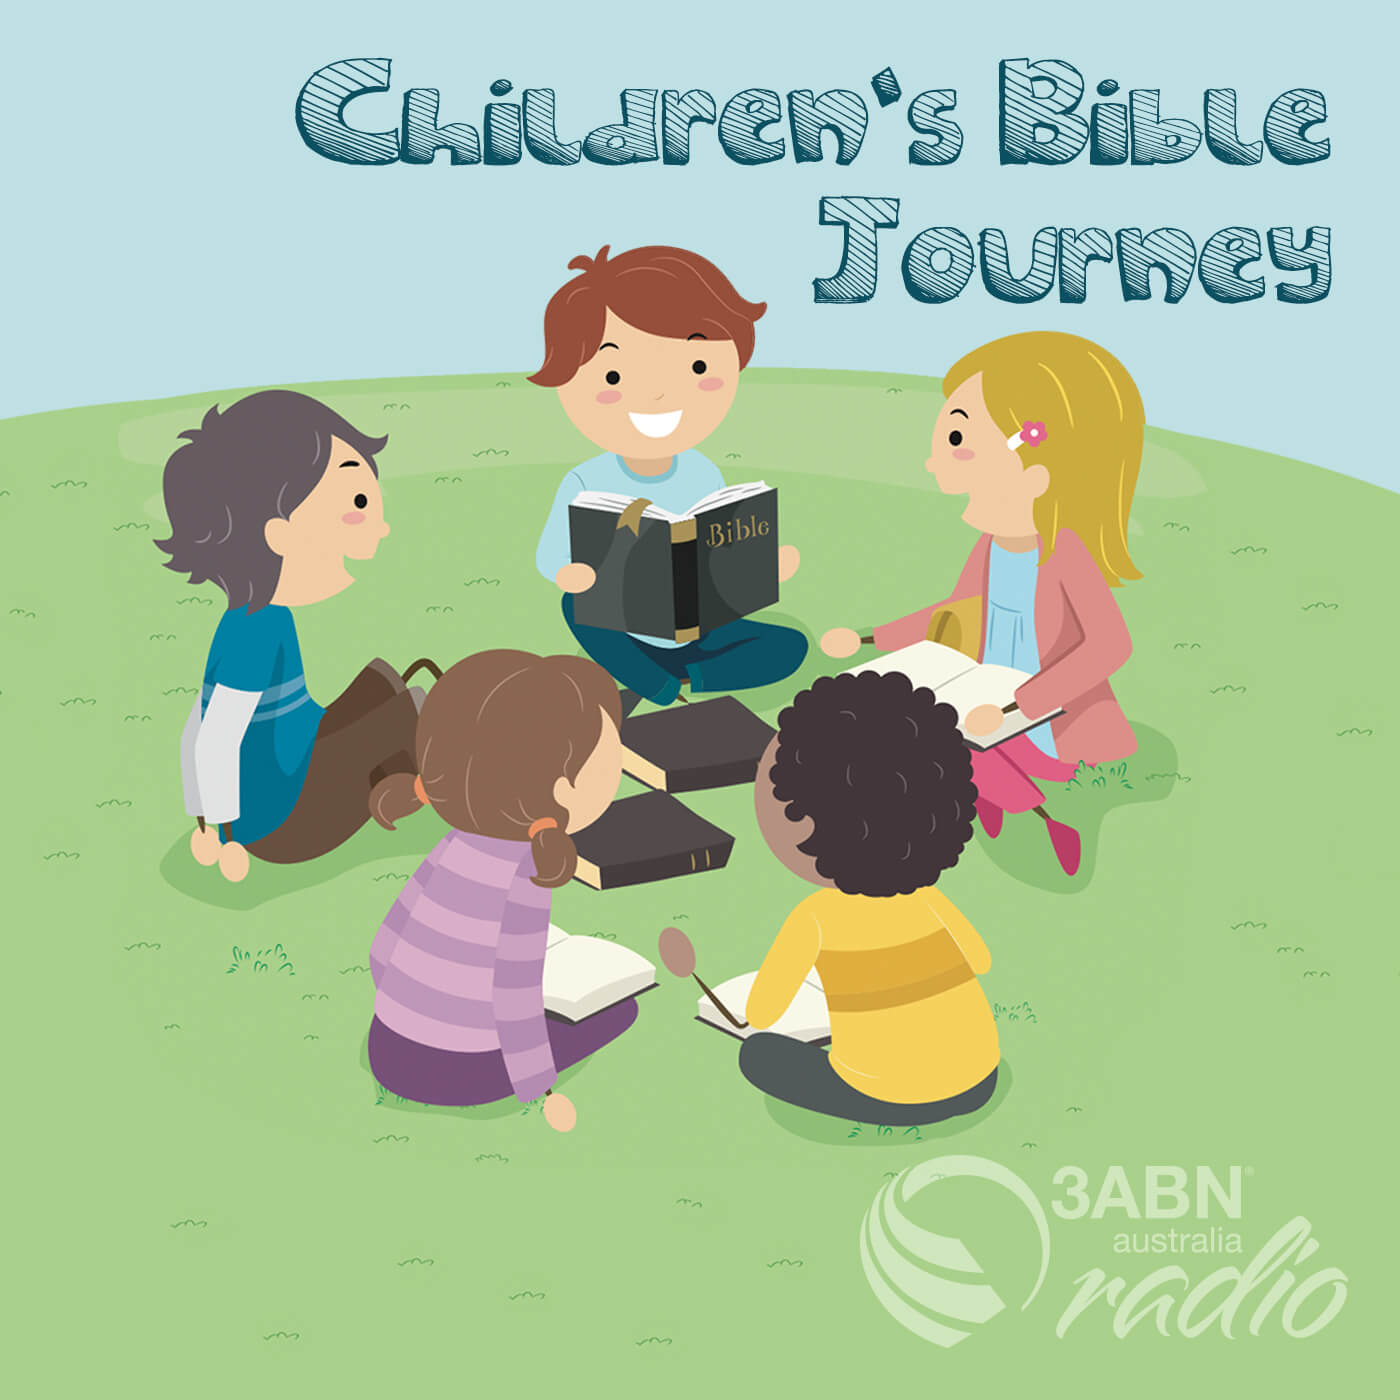 Children's Bible Journey - 2224